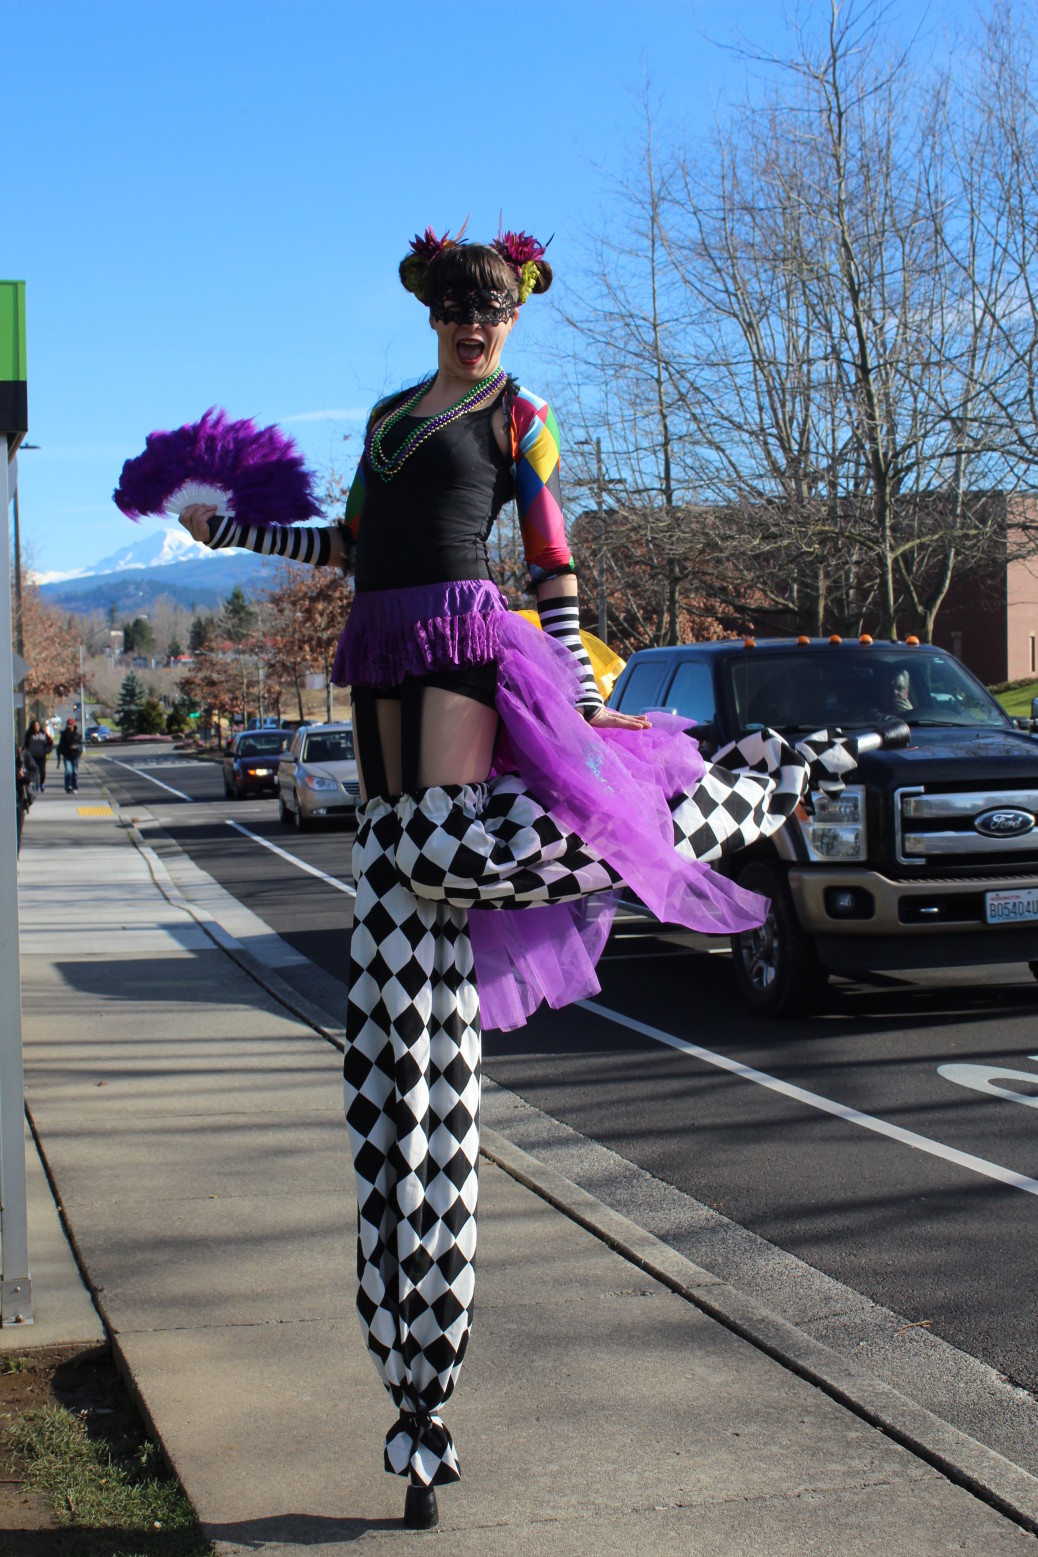 Heidi Sorgen prepares for the annual Mardi Gras festivities on her pair of stilts. Photo by Alex George